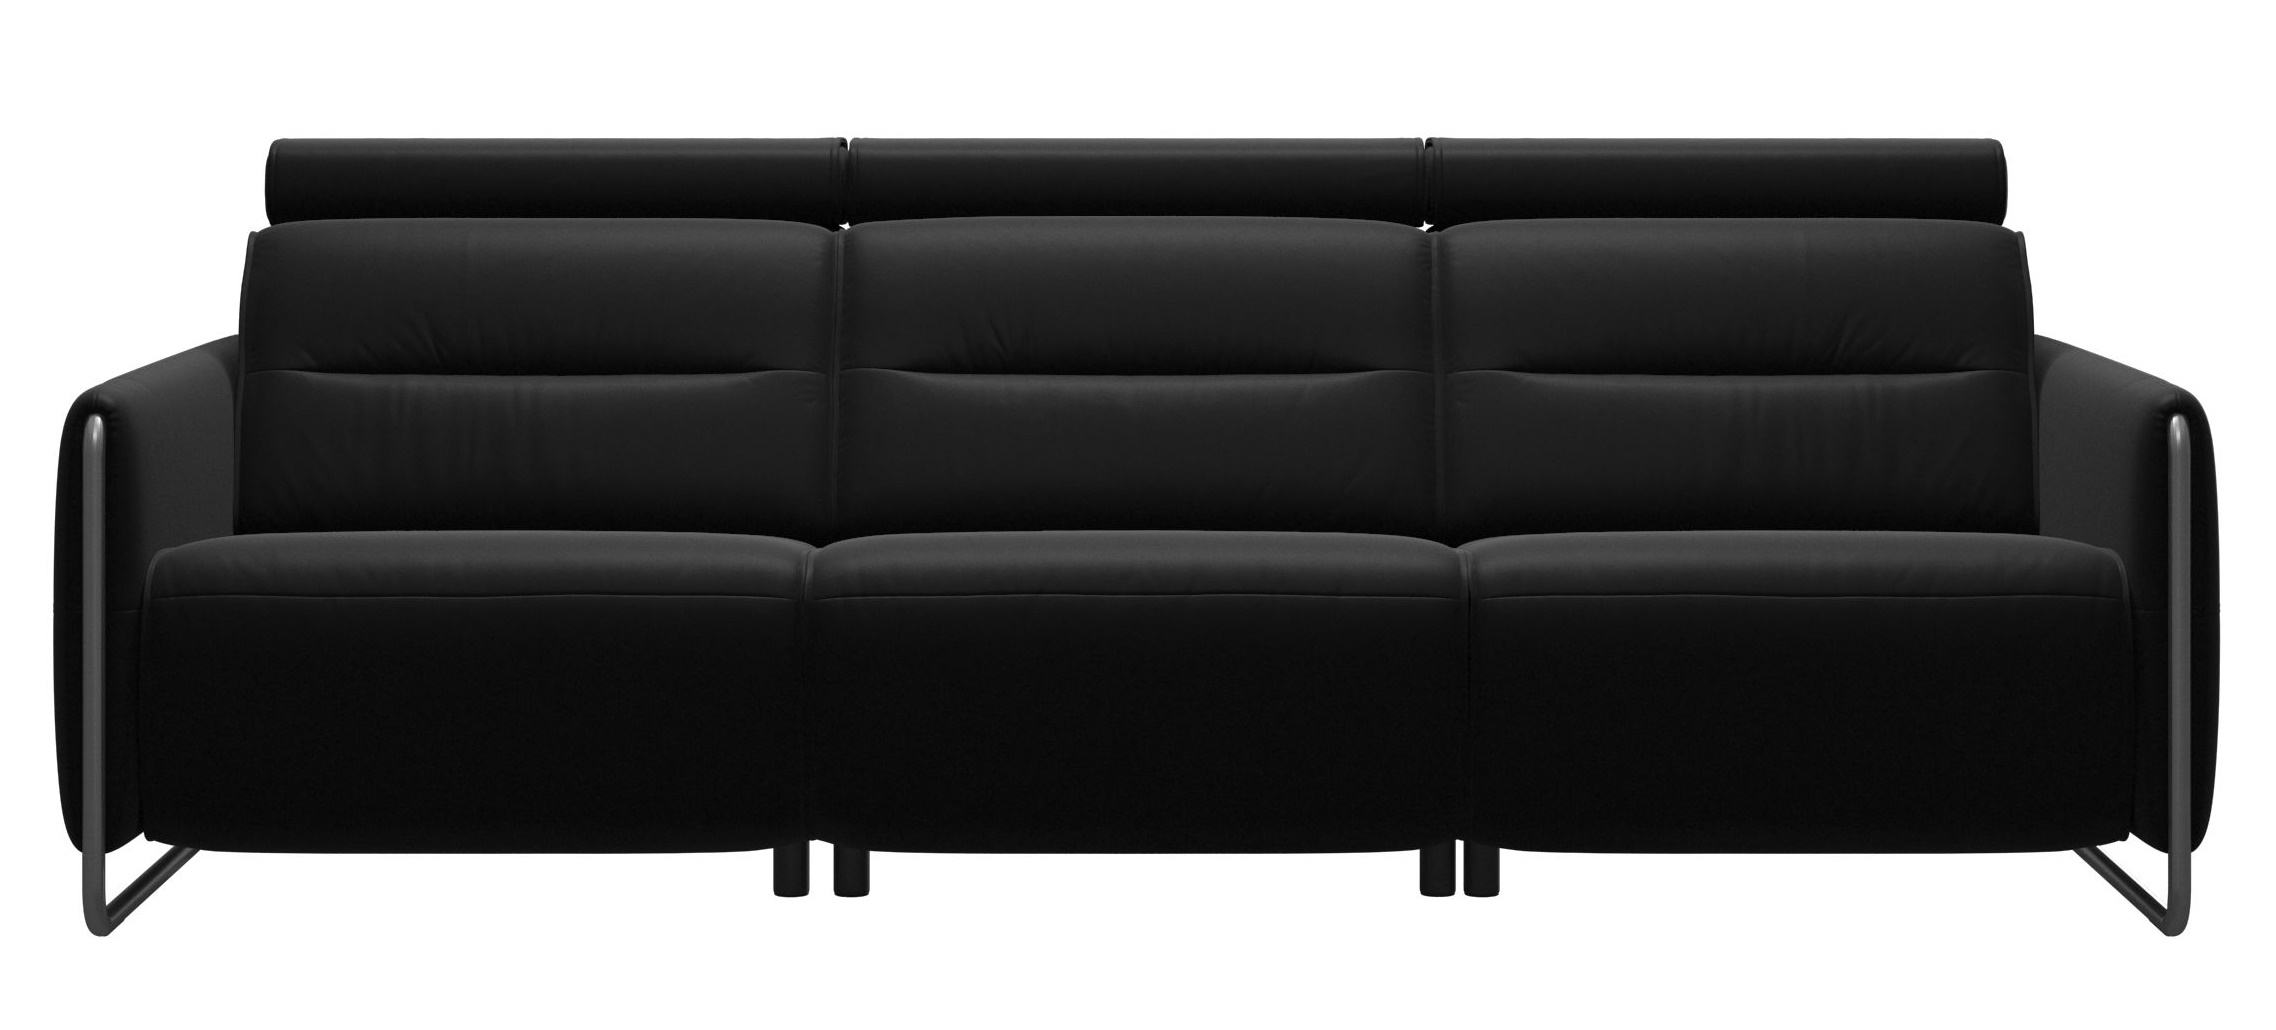 Canapea cu 3 locuri Stressless Emily Arm Steel reclinere laterale brate crom tapiterie piele Batick Black Arm Canapele